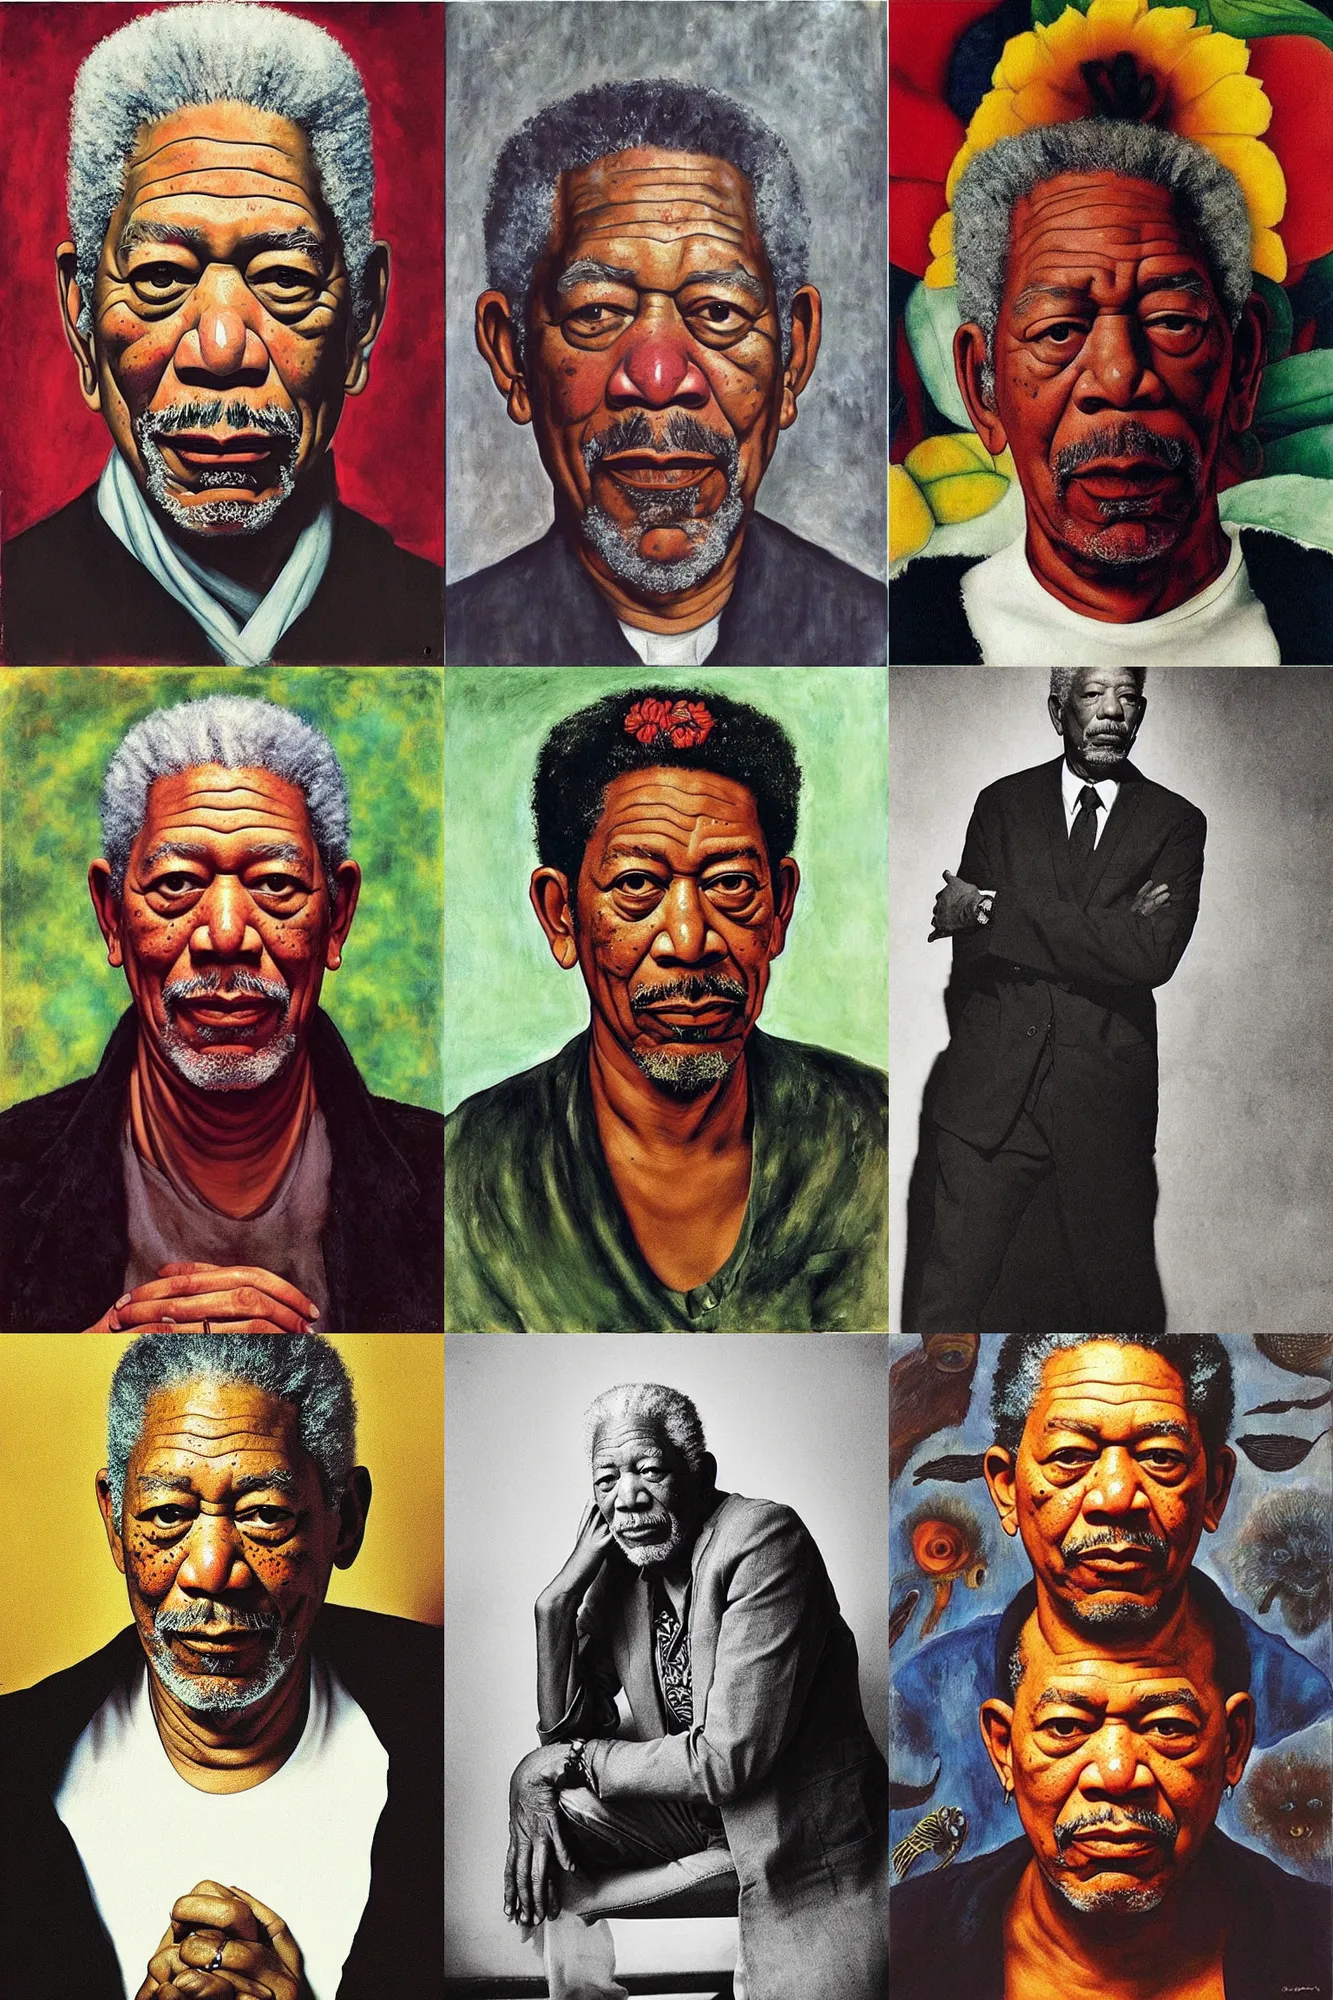 Prompt: “Morgan Freeman, portrait by Frida Kahlo”